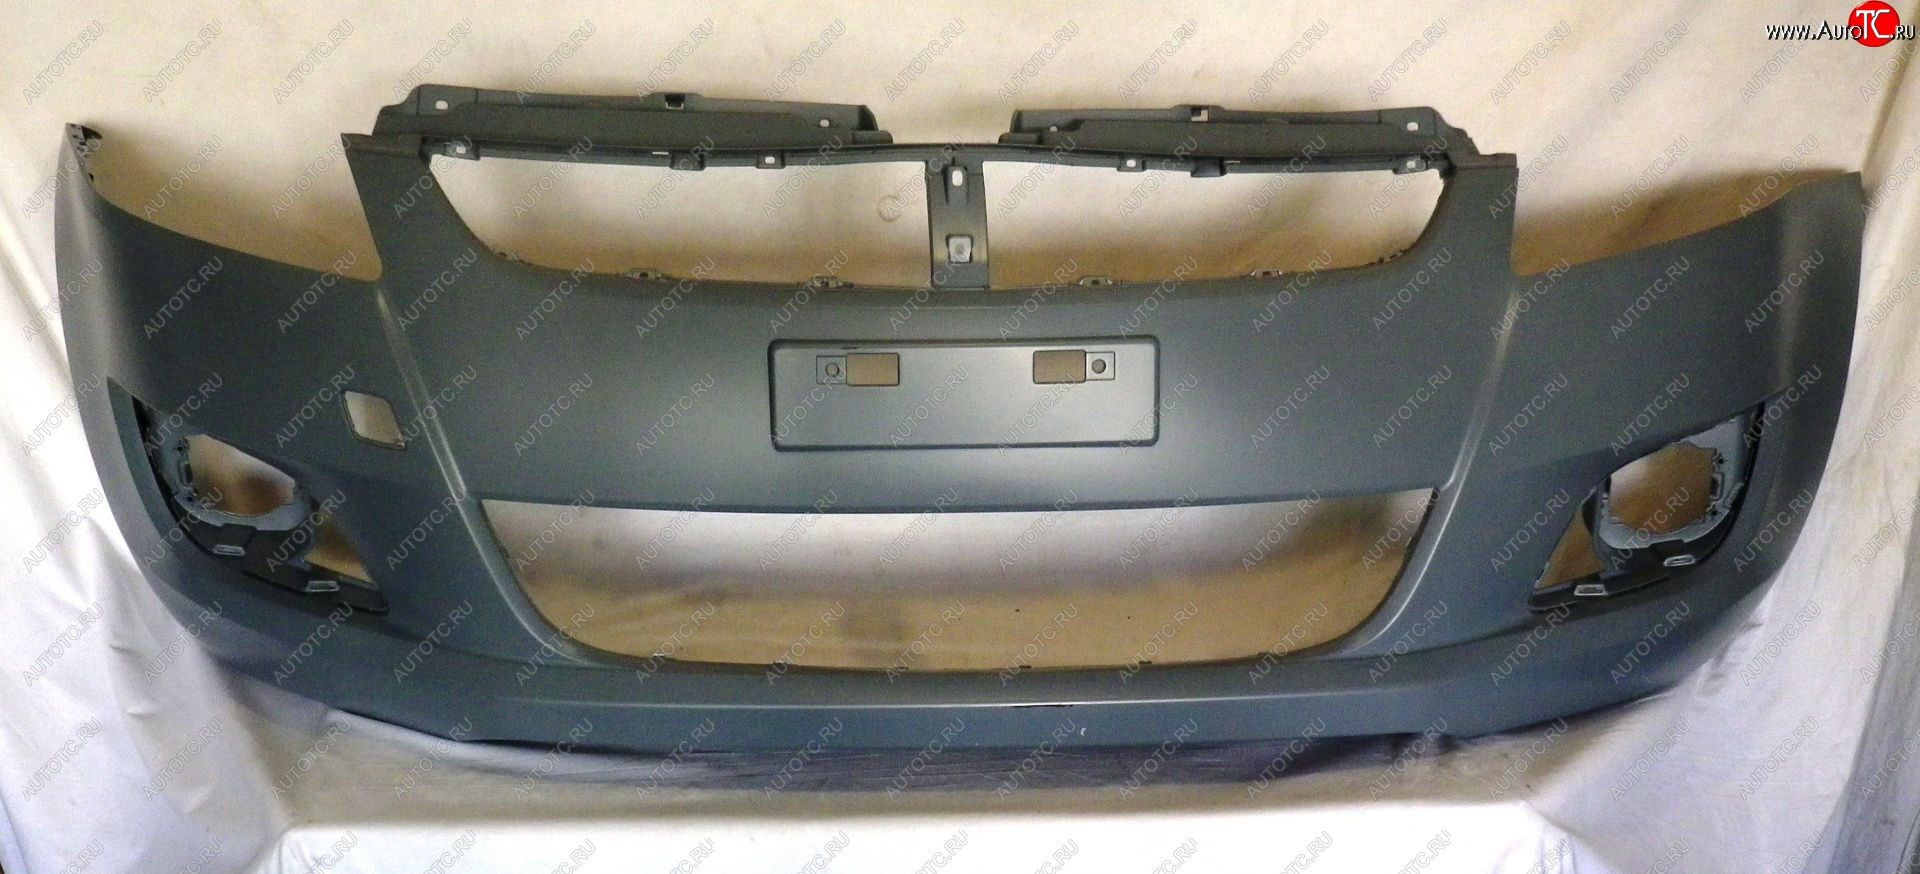 8 499 р. Передний бампер TYG  Suzuki Swift  ZC72S (2010-2013) (Неокрашенный)  с доставкой в г. Калуга